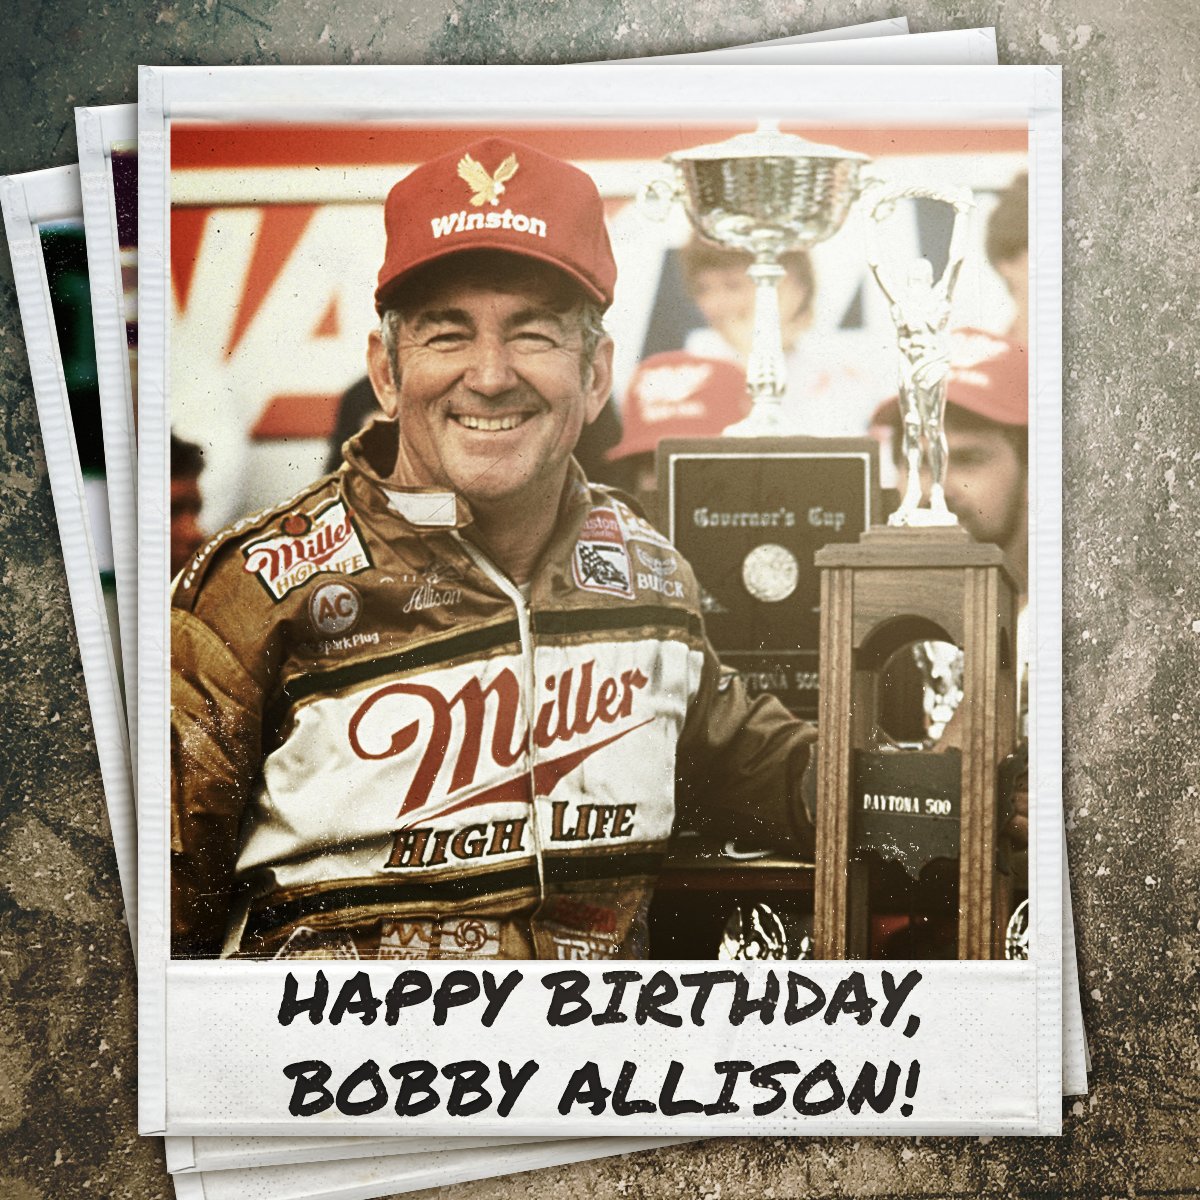 Happy birthday to the three-time Daytona 500 winner, 1983 champion, and inductee Bobby Allison! 